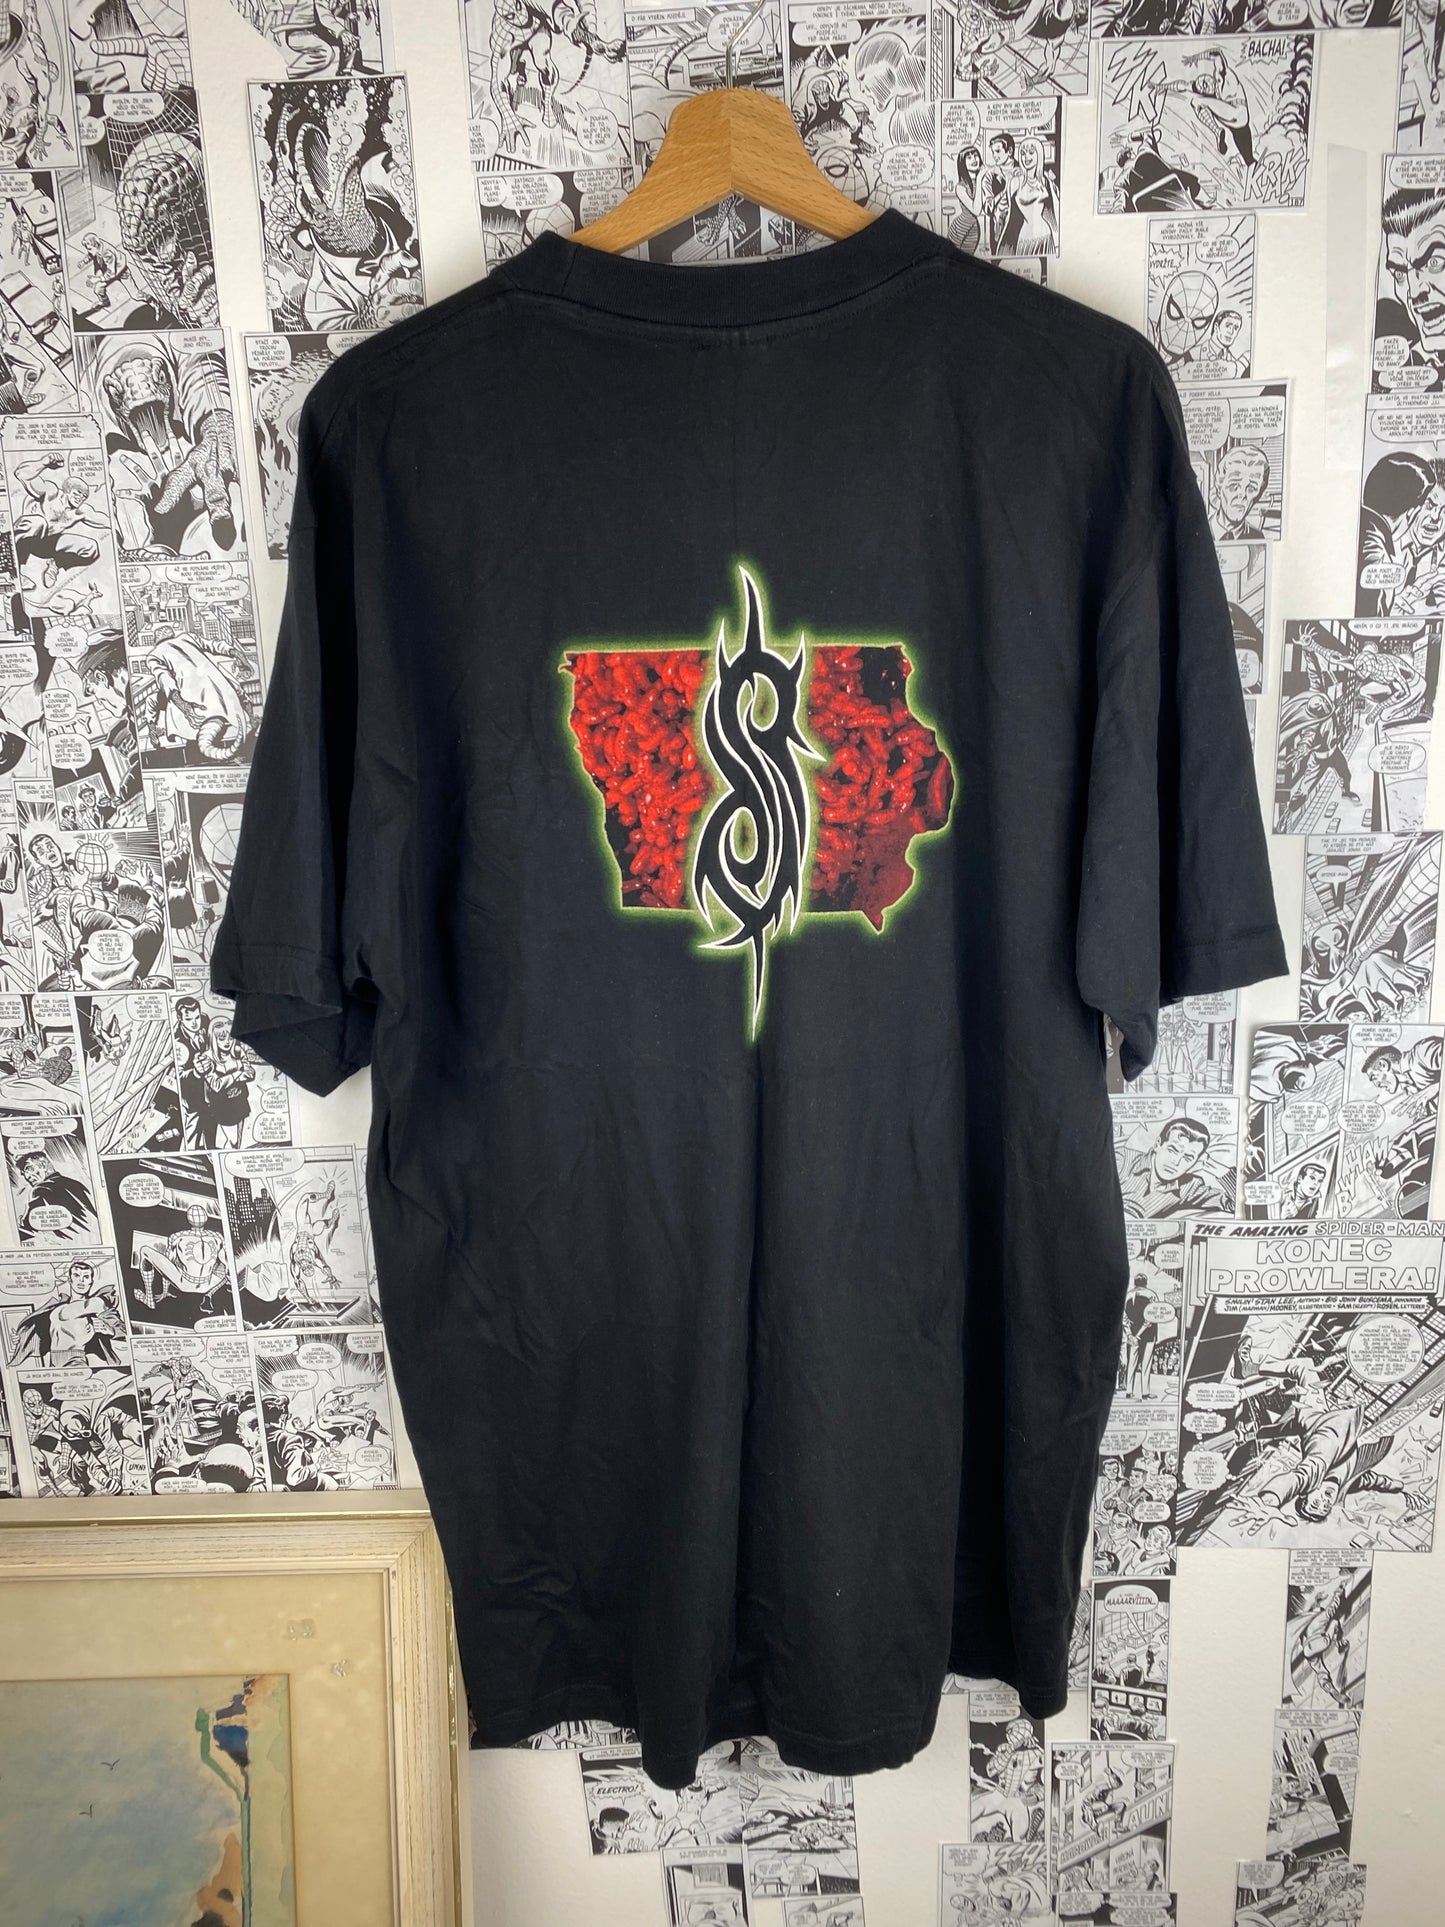 Vintage Slipknot “Maggots” 2001 t-shirt